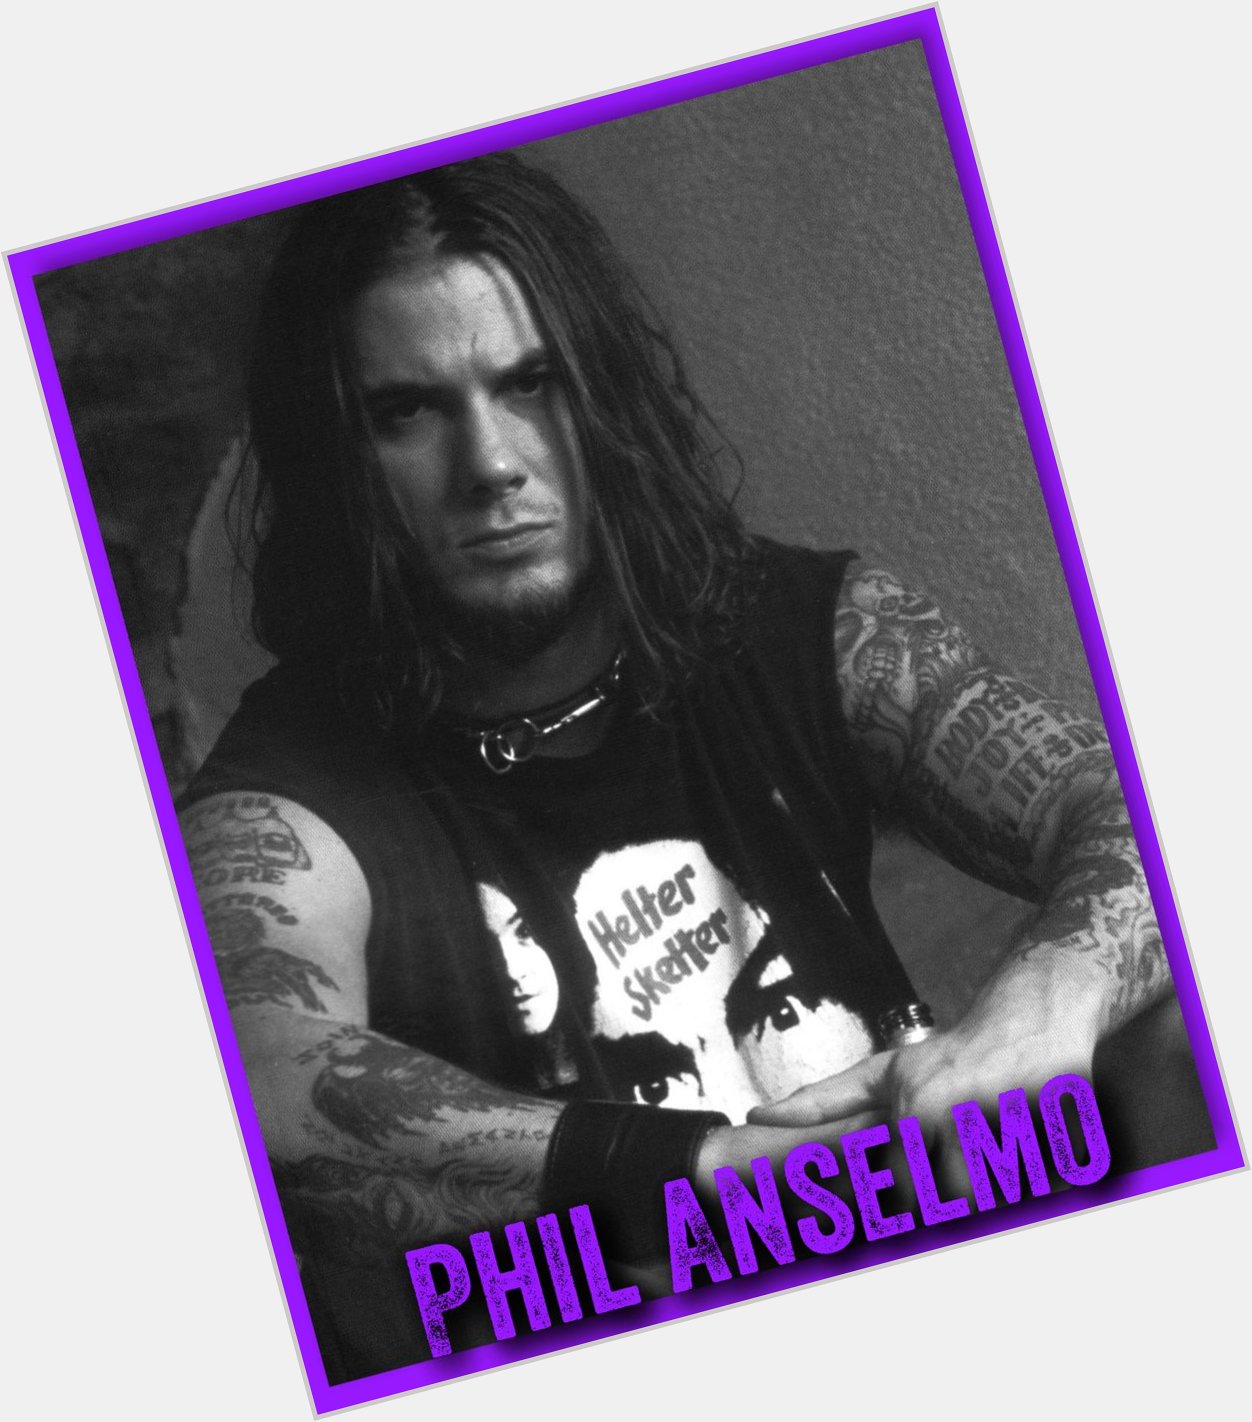 Happy Birthday Phil Anselmo
Lead singer Pantera
June 30, 1968 New Orleans, Louisiana 